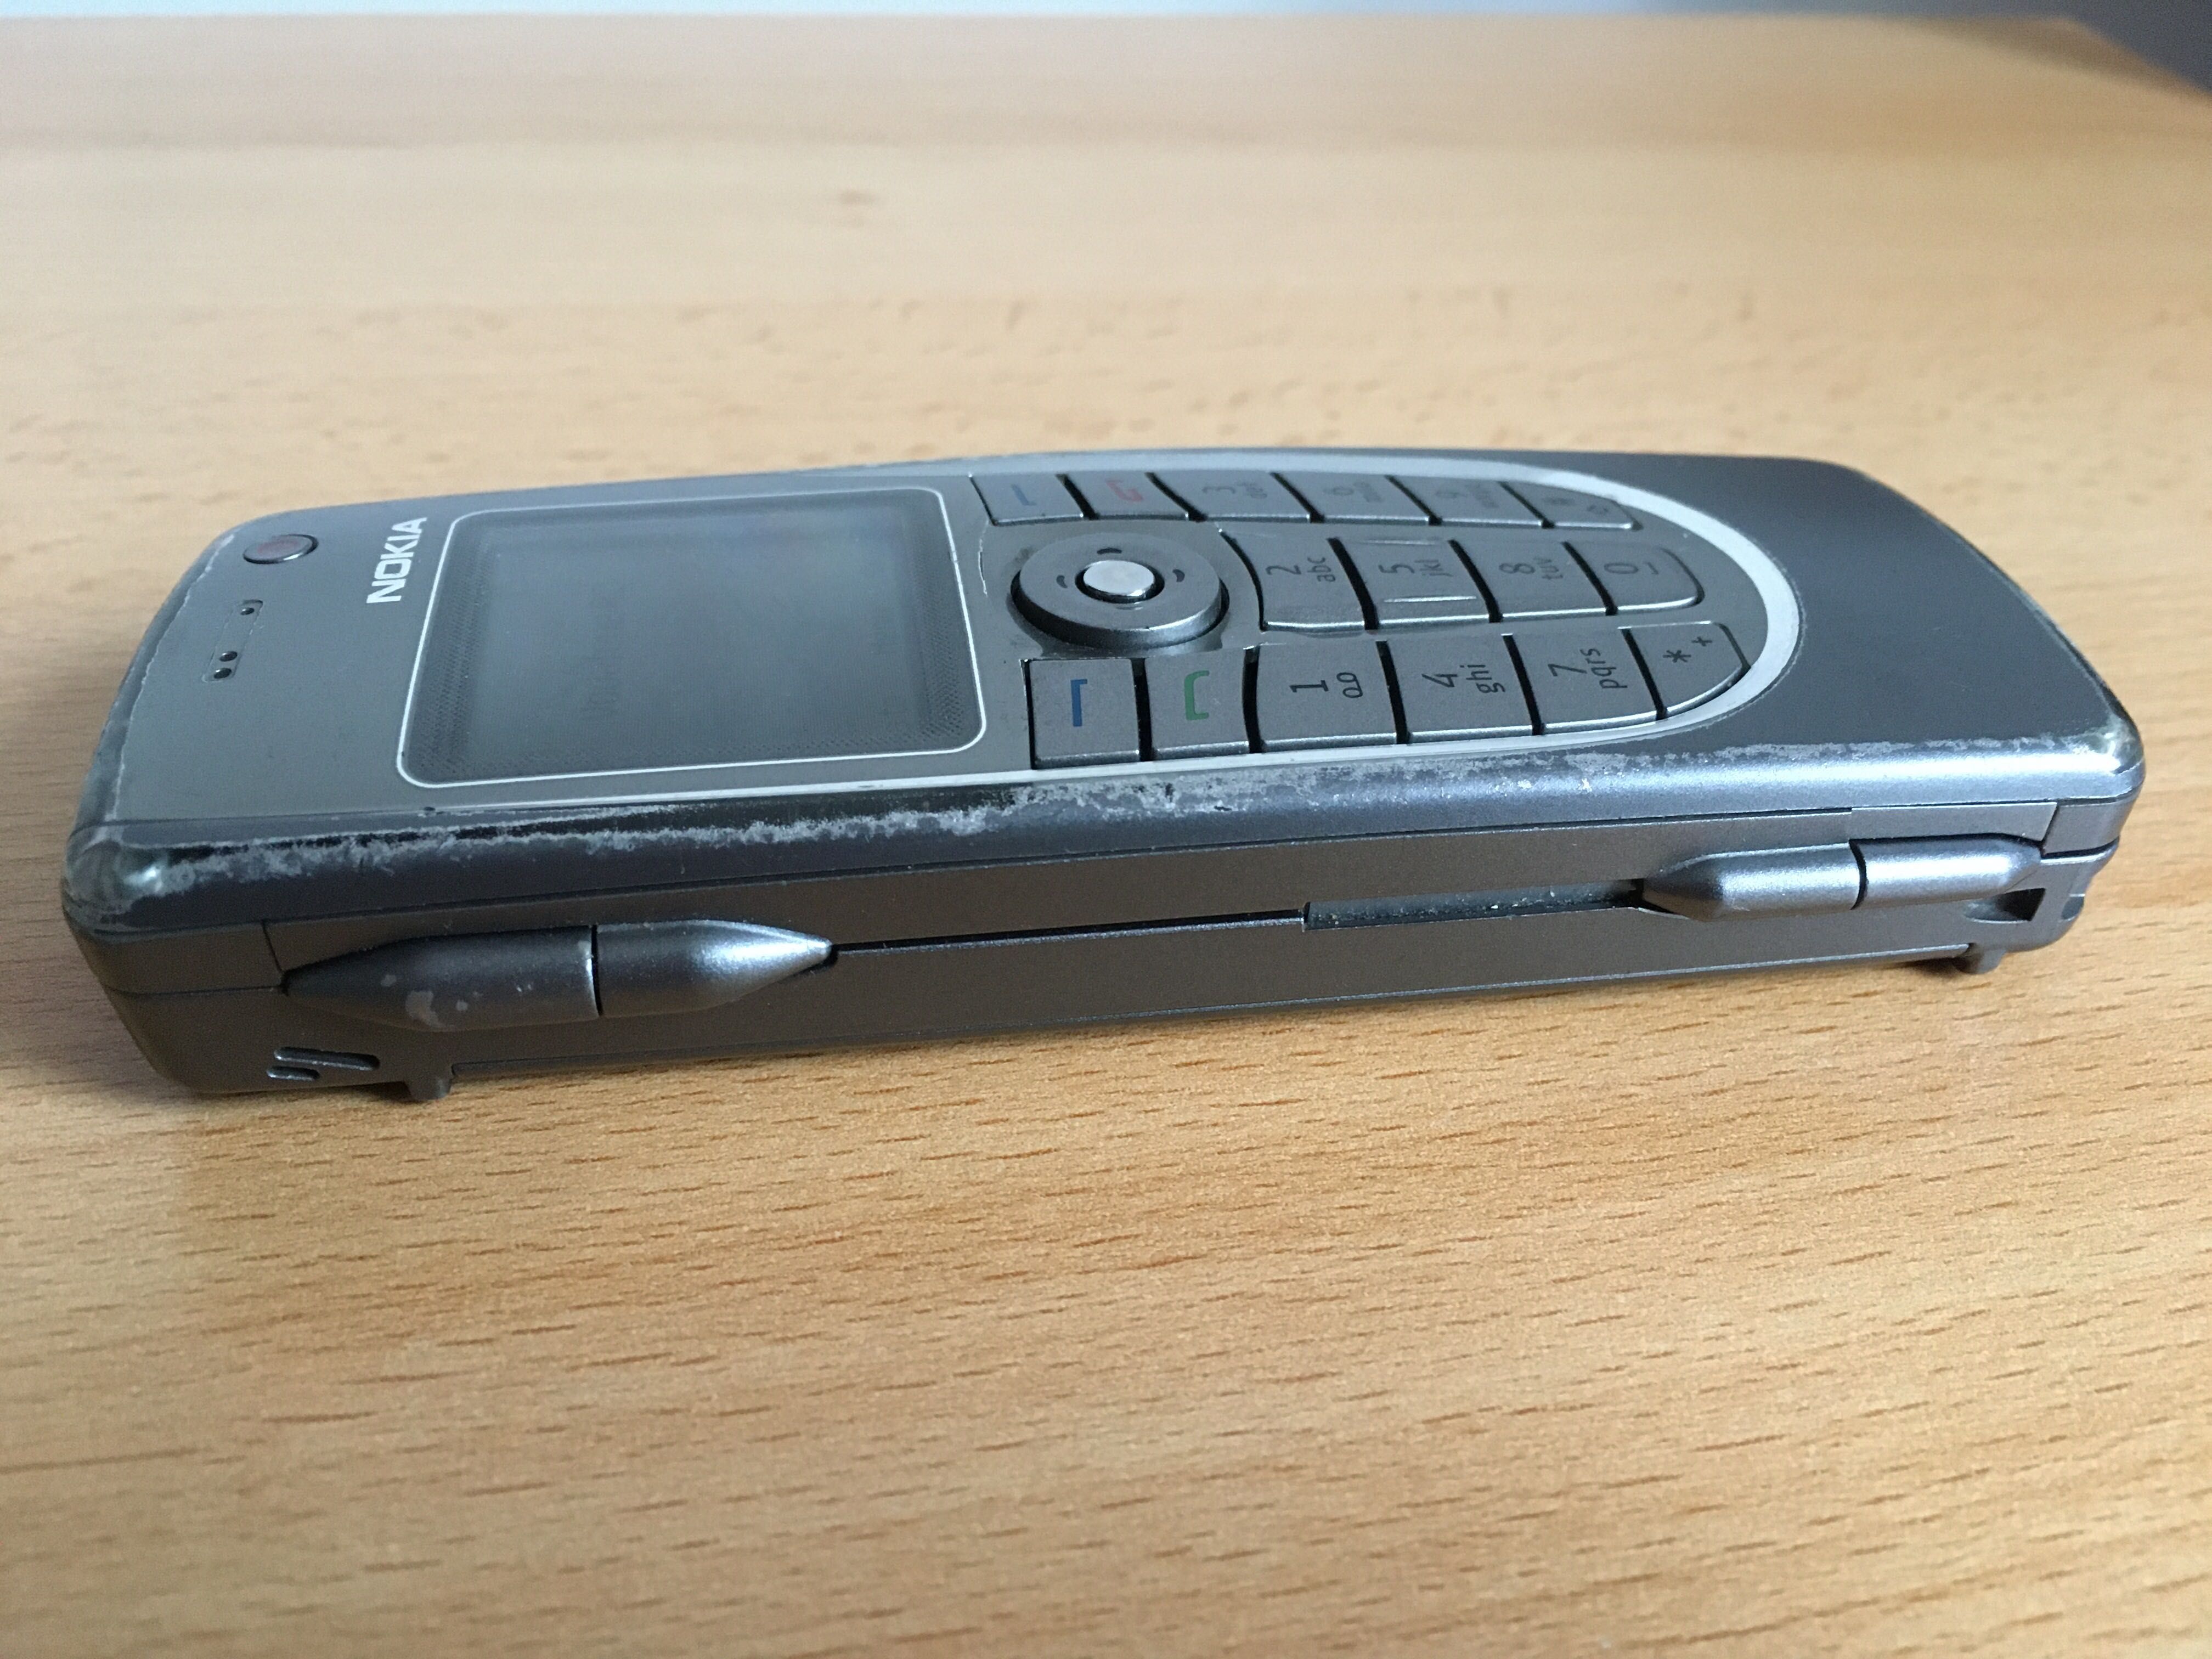 Nokia 9300i, E61, BlackBerry